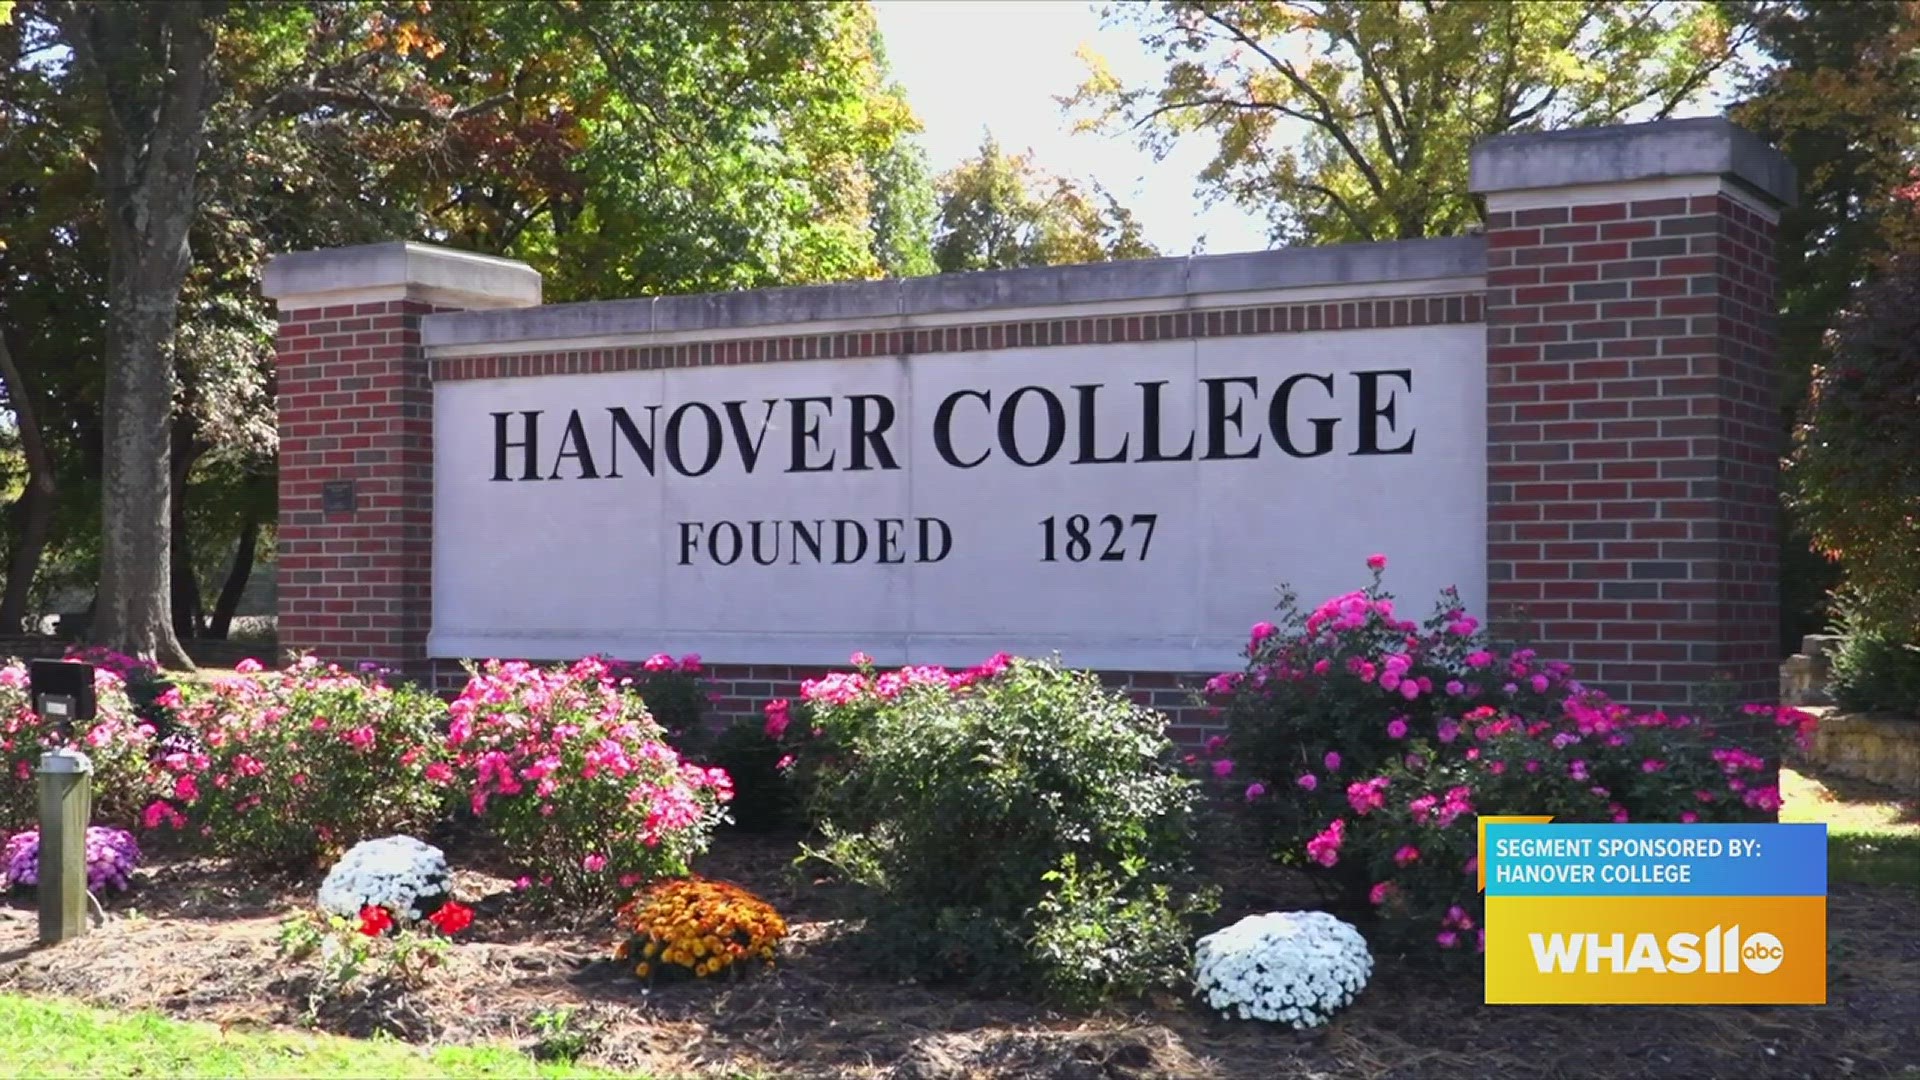 Learn more at hanover.edu.